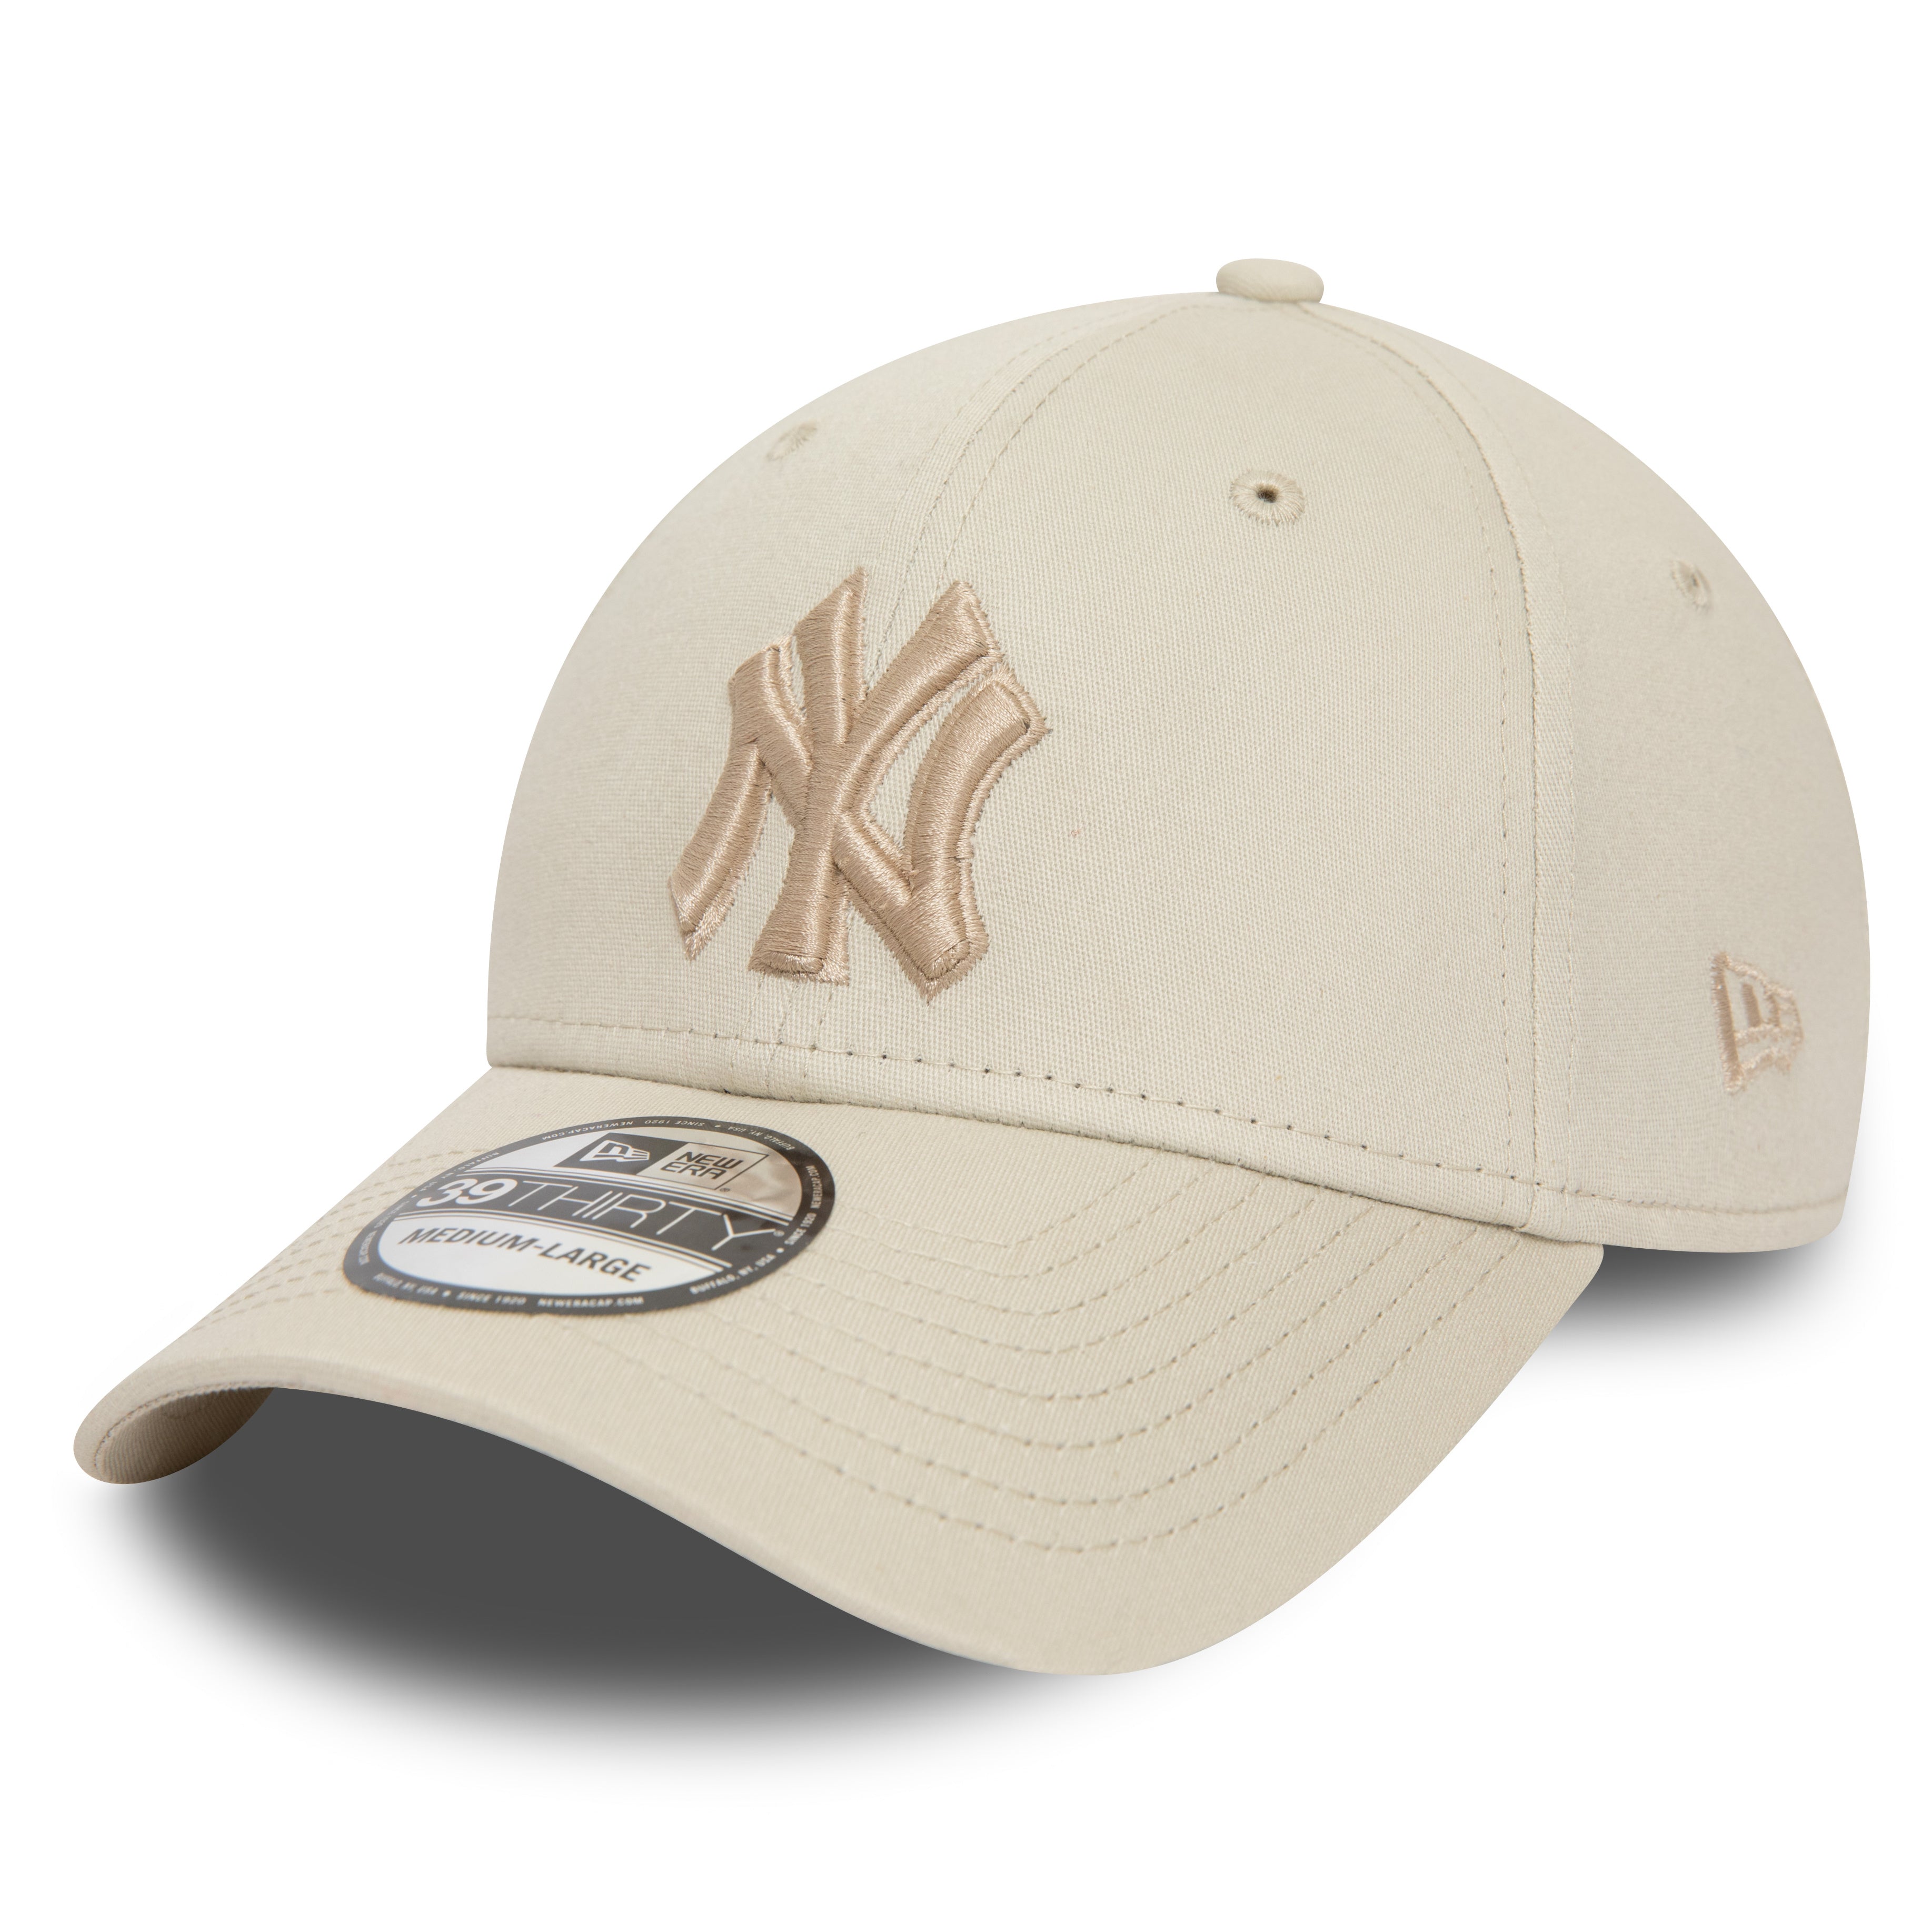 NEW ERA 39THIRTY OUTLINE NEW YORK YANKEES STONE CAP